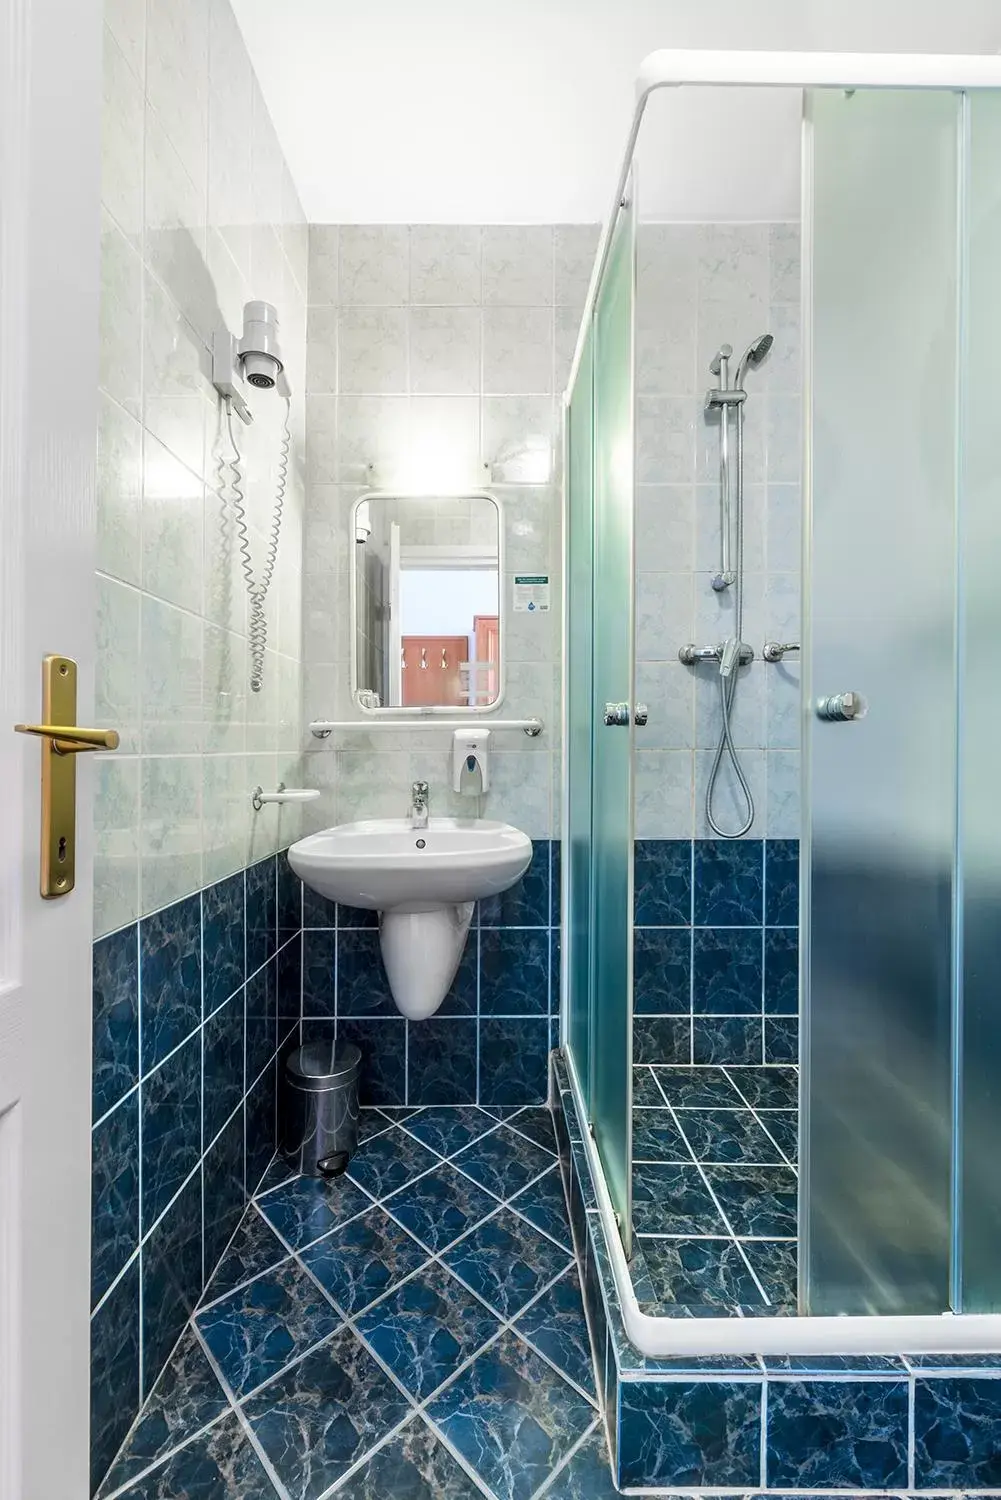 Bathroom in Baross City Hotel - Budapest